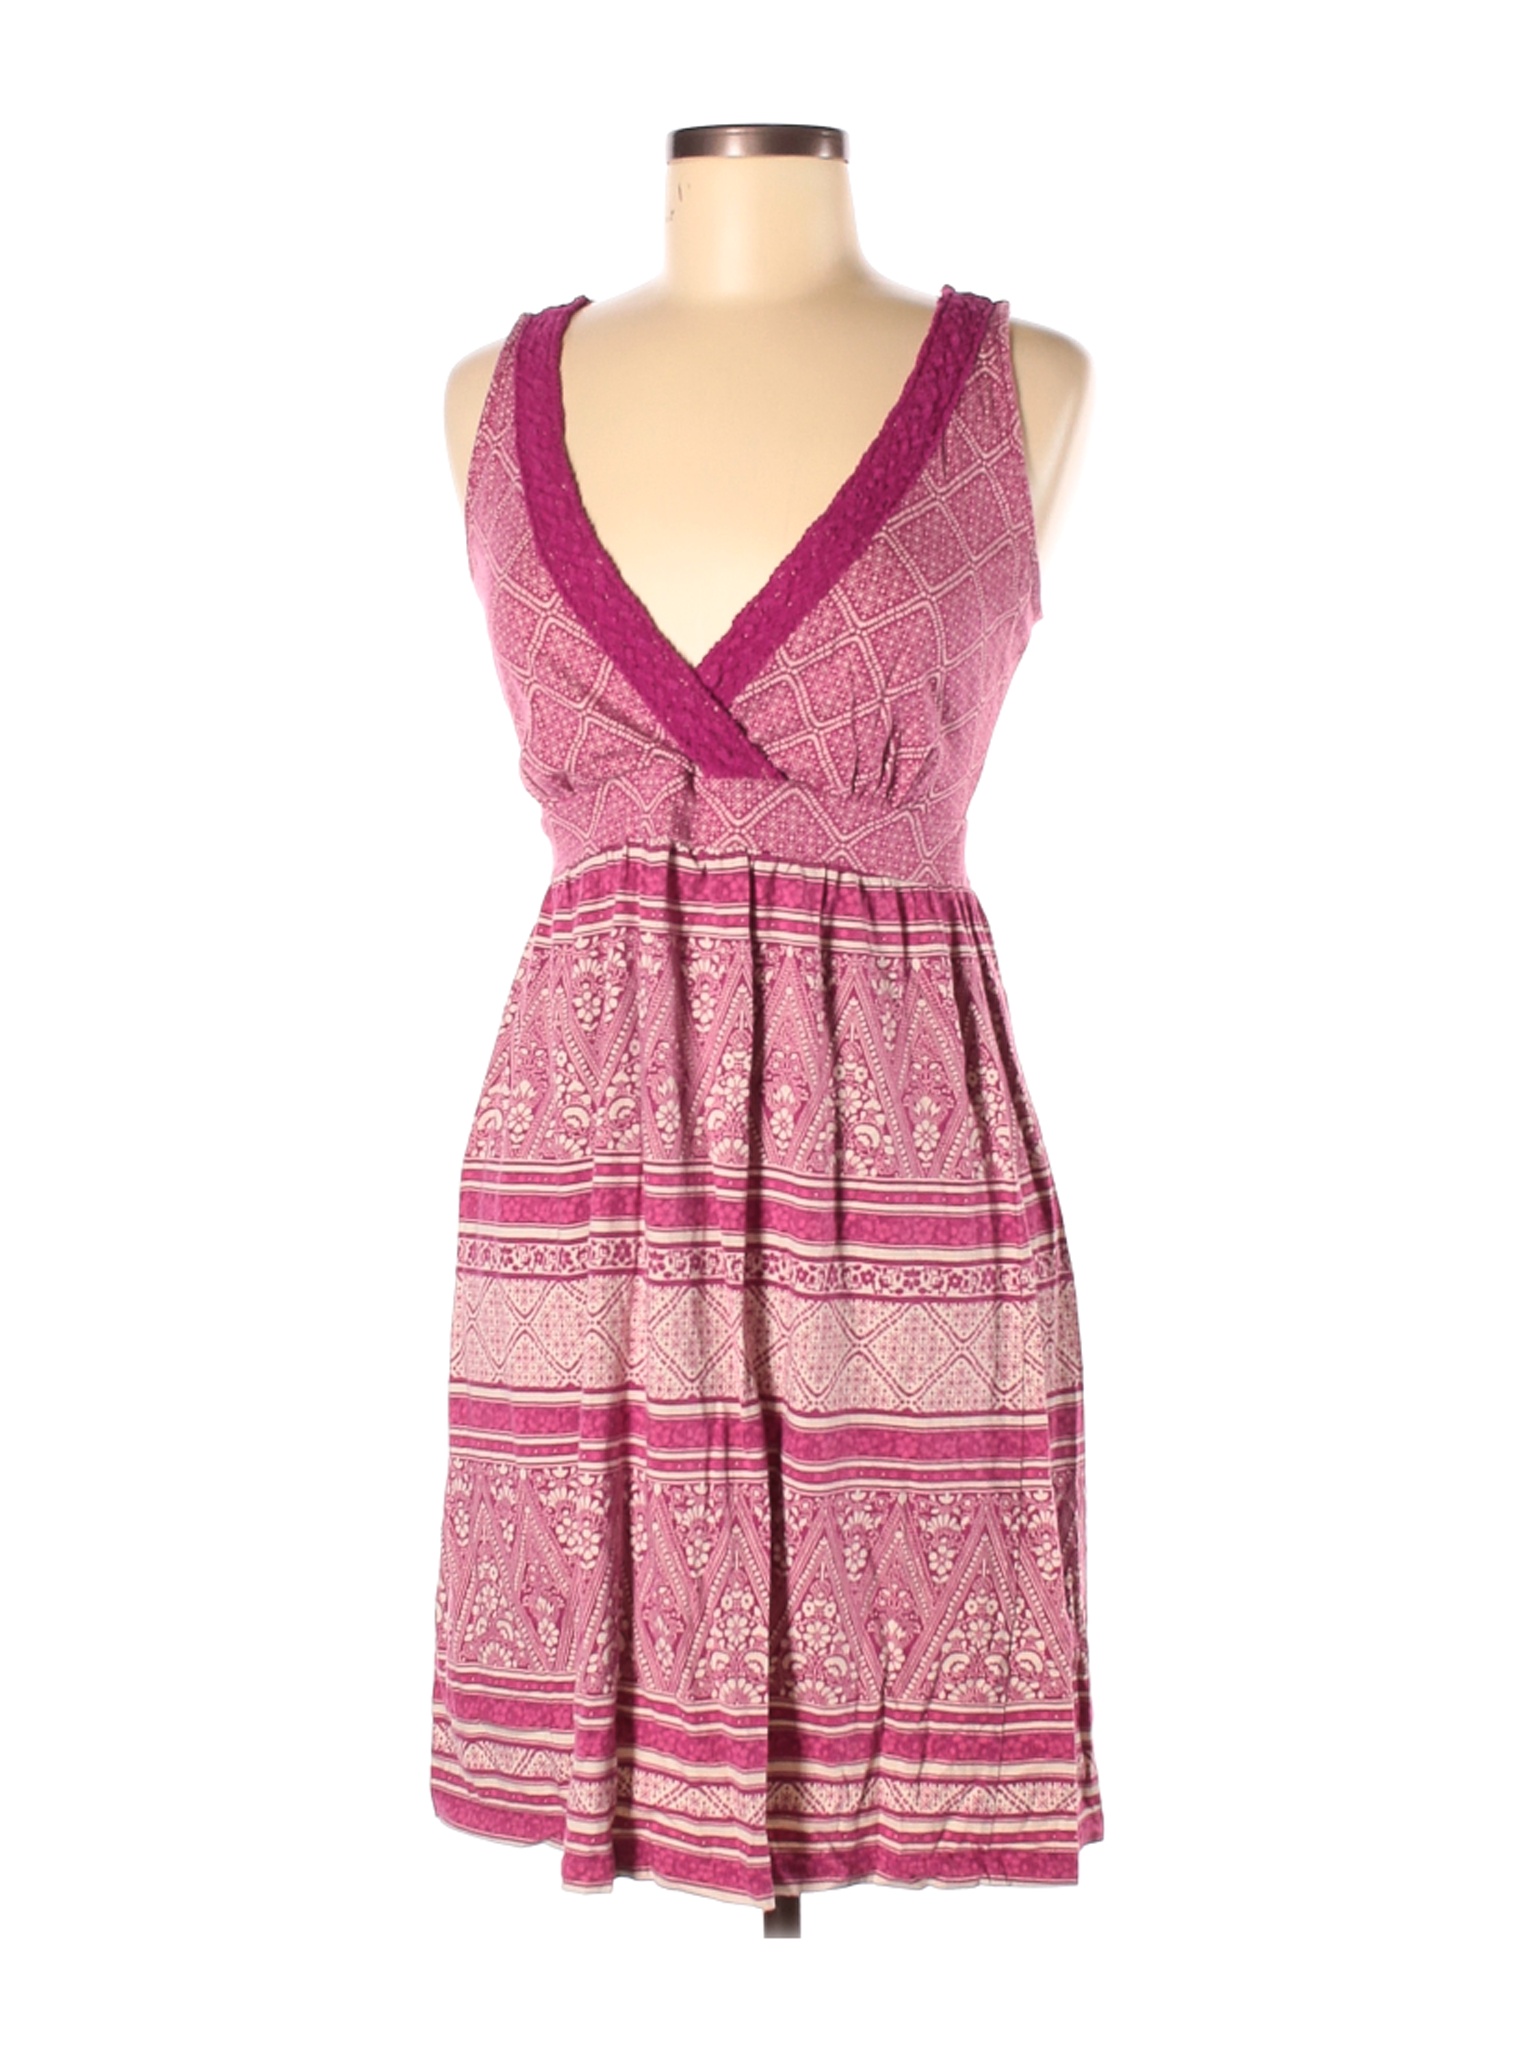 SONOMA life + style Women Pink Casual Dress M | eBay